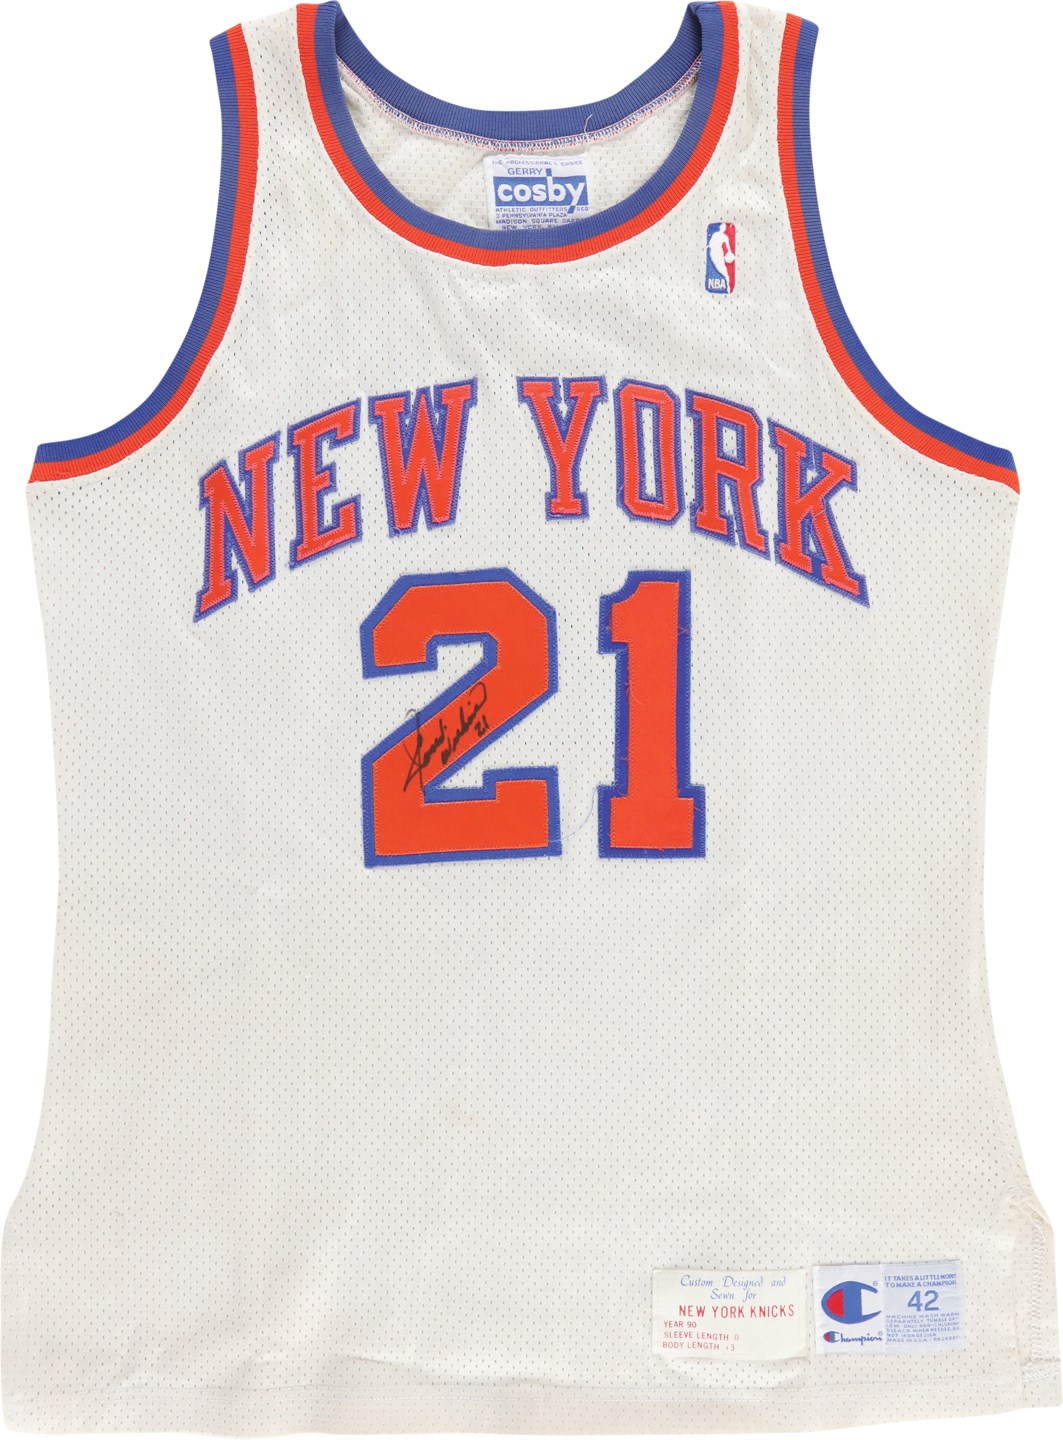 - 1990-91 Gerald Wilkins New York Knicks Signed Game Worn Jersey